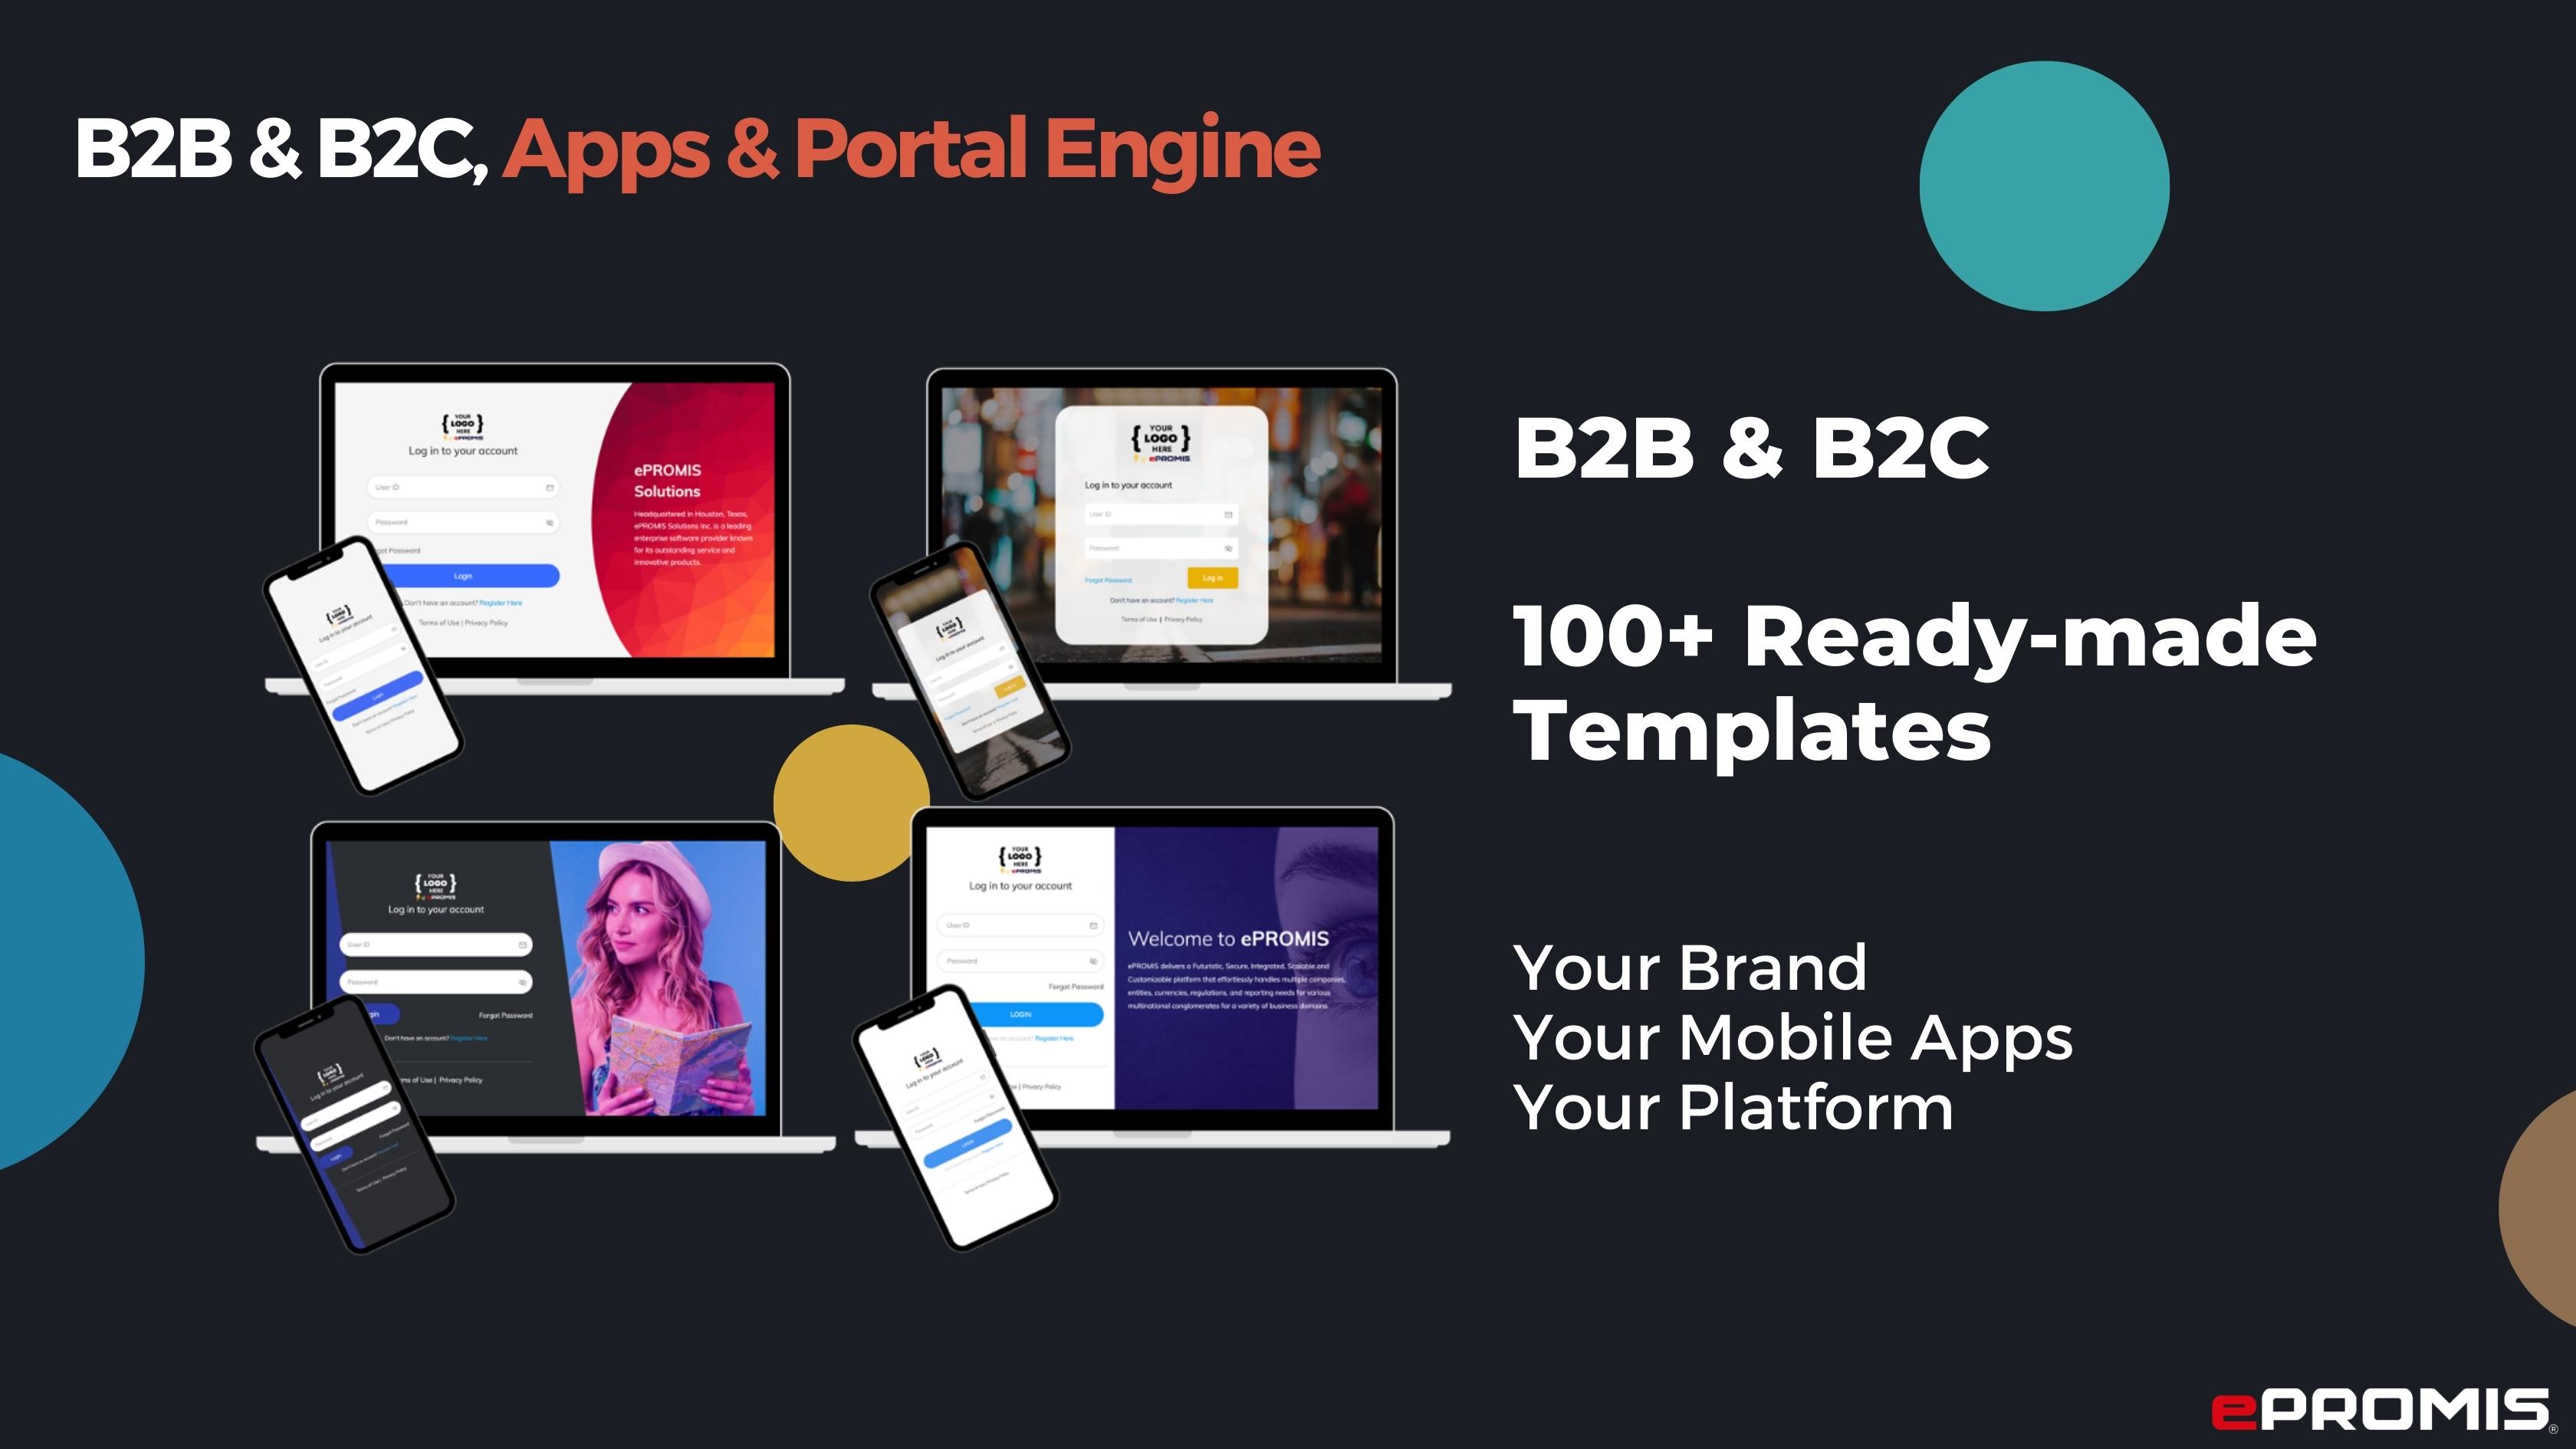 B2B and B2C Apps & Portals Engine